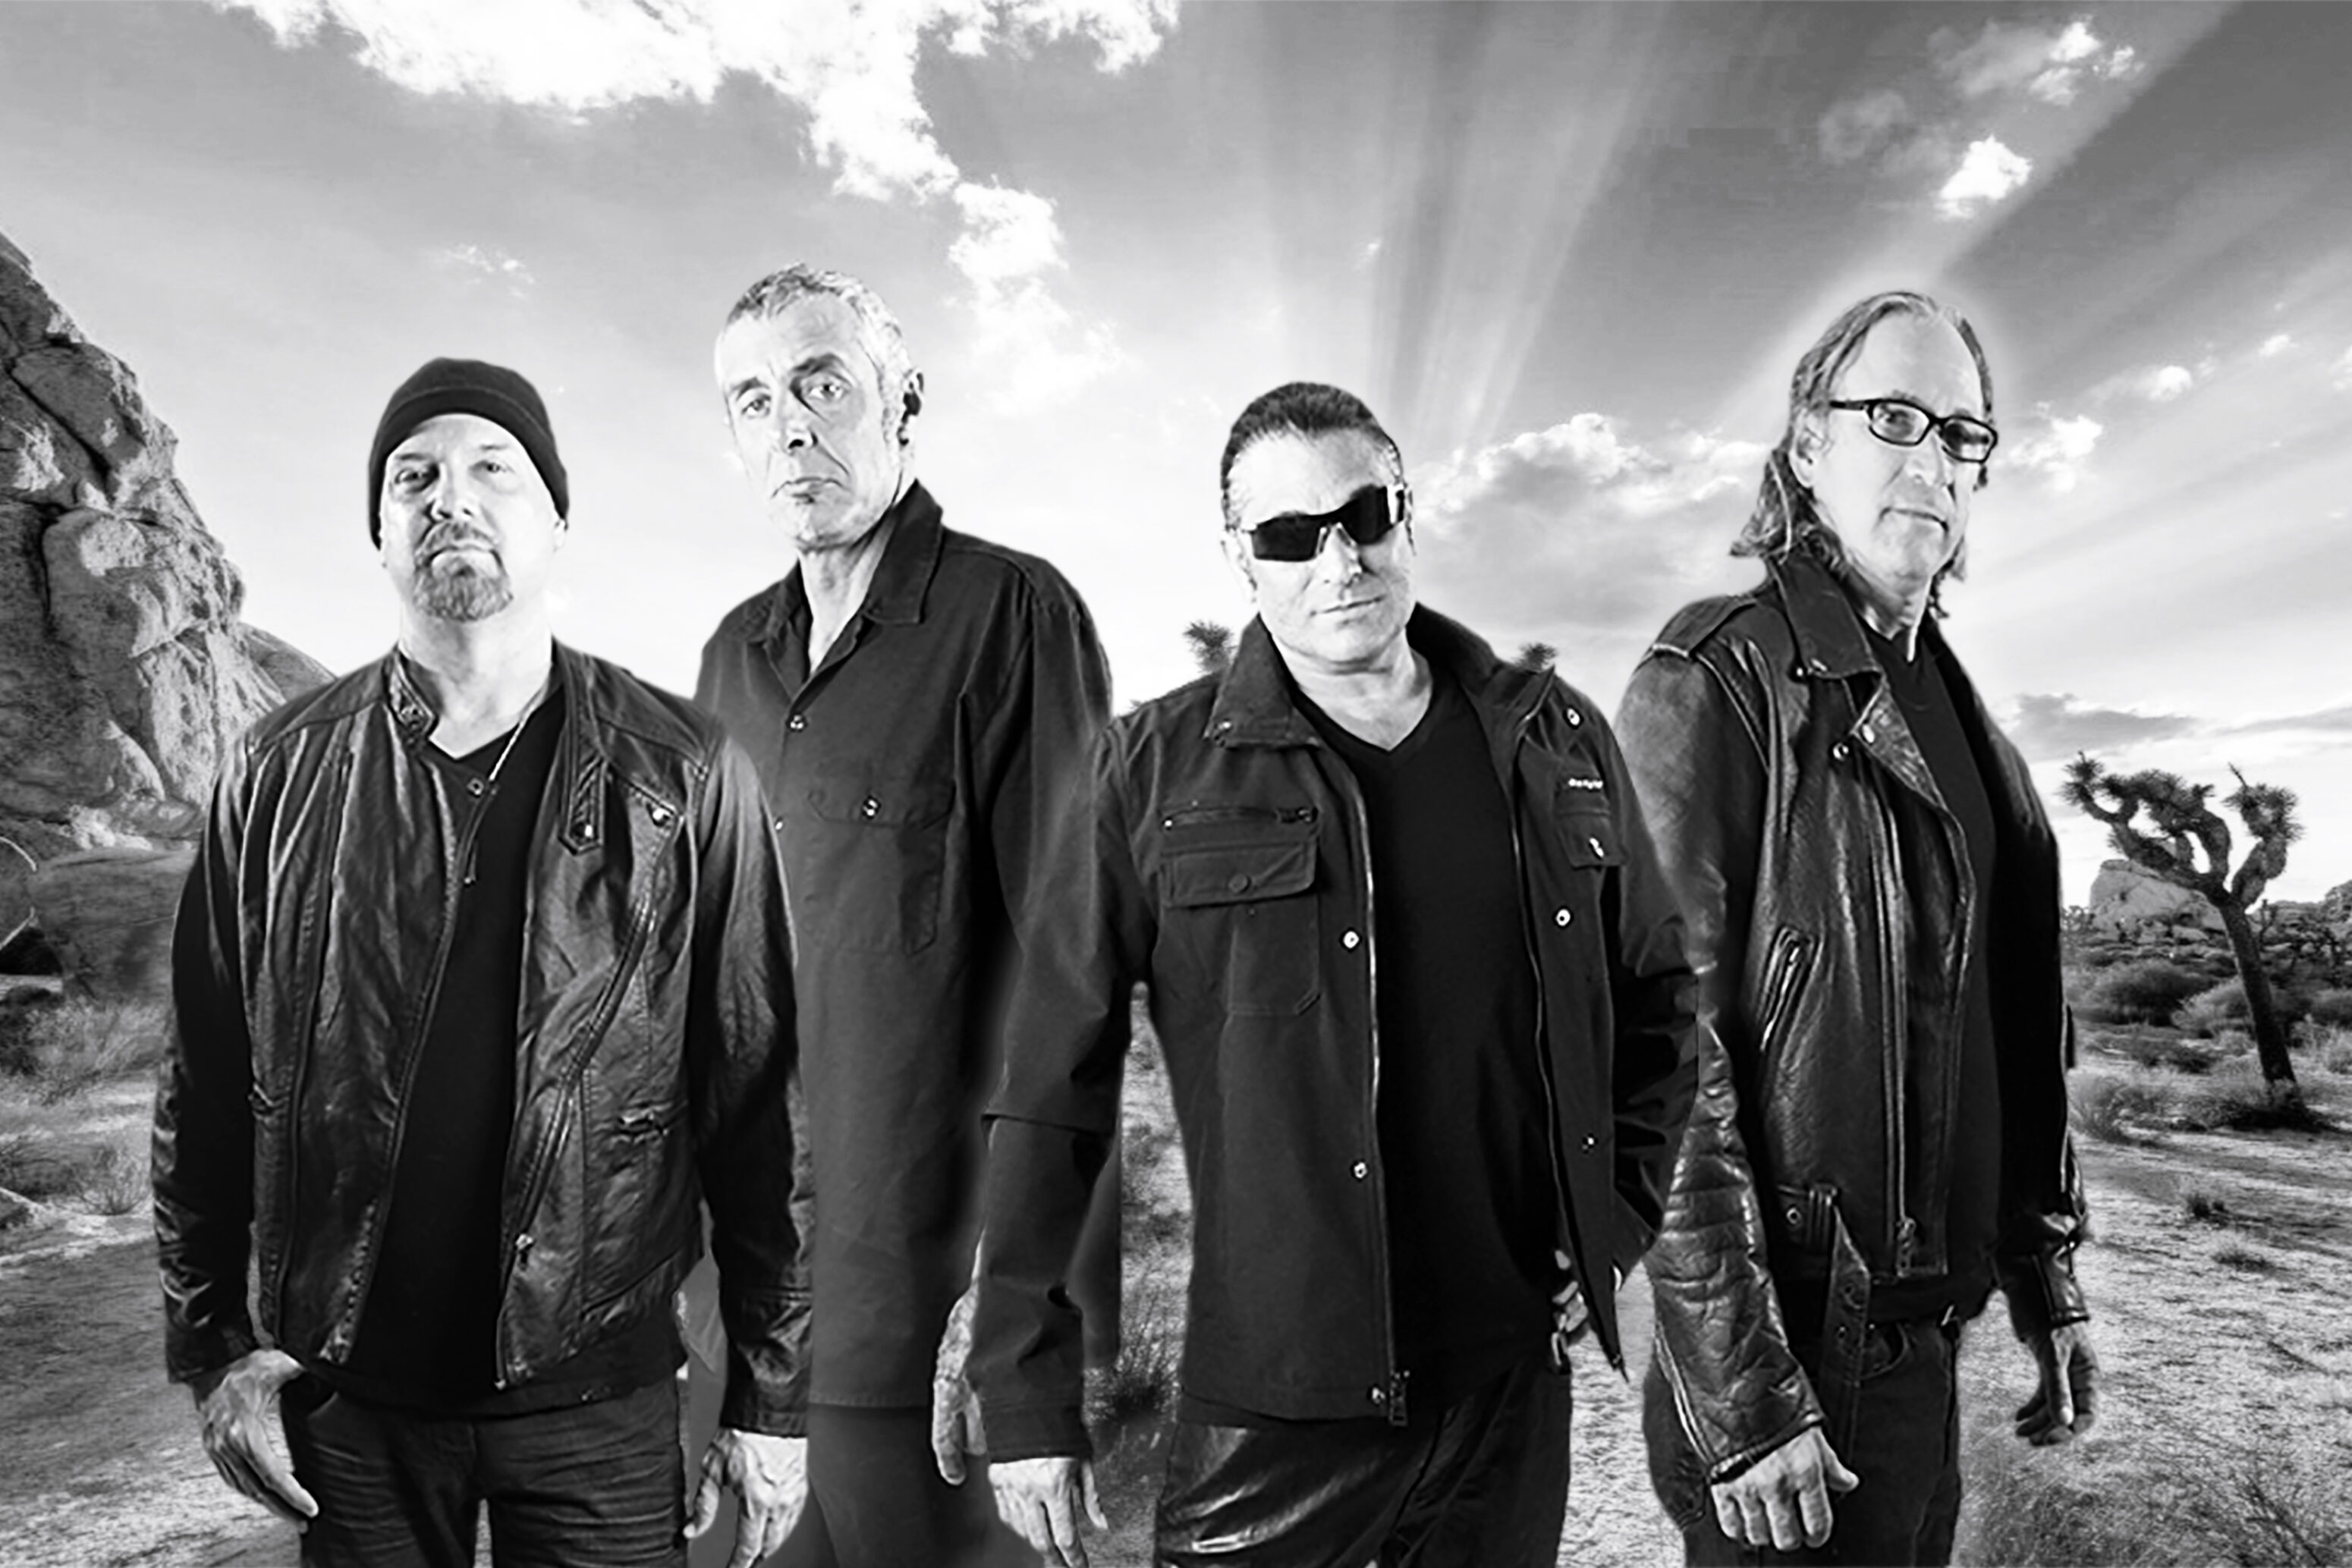 Vertigo - U2 Tribute, Original Sin- Tribute to INXS, and Heart of Glass - Tribute to Blondie